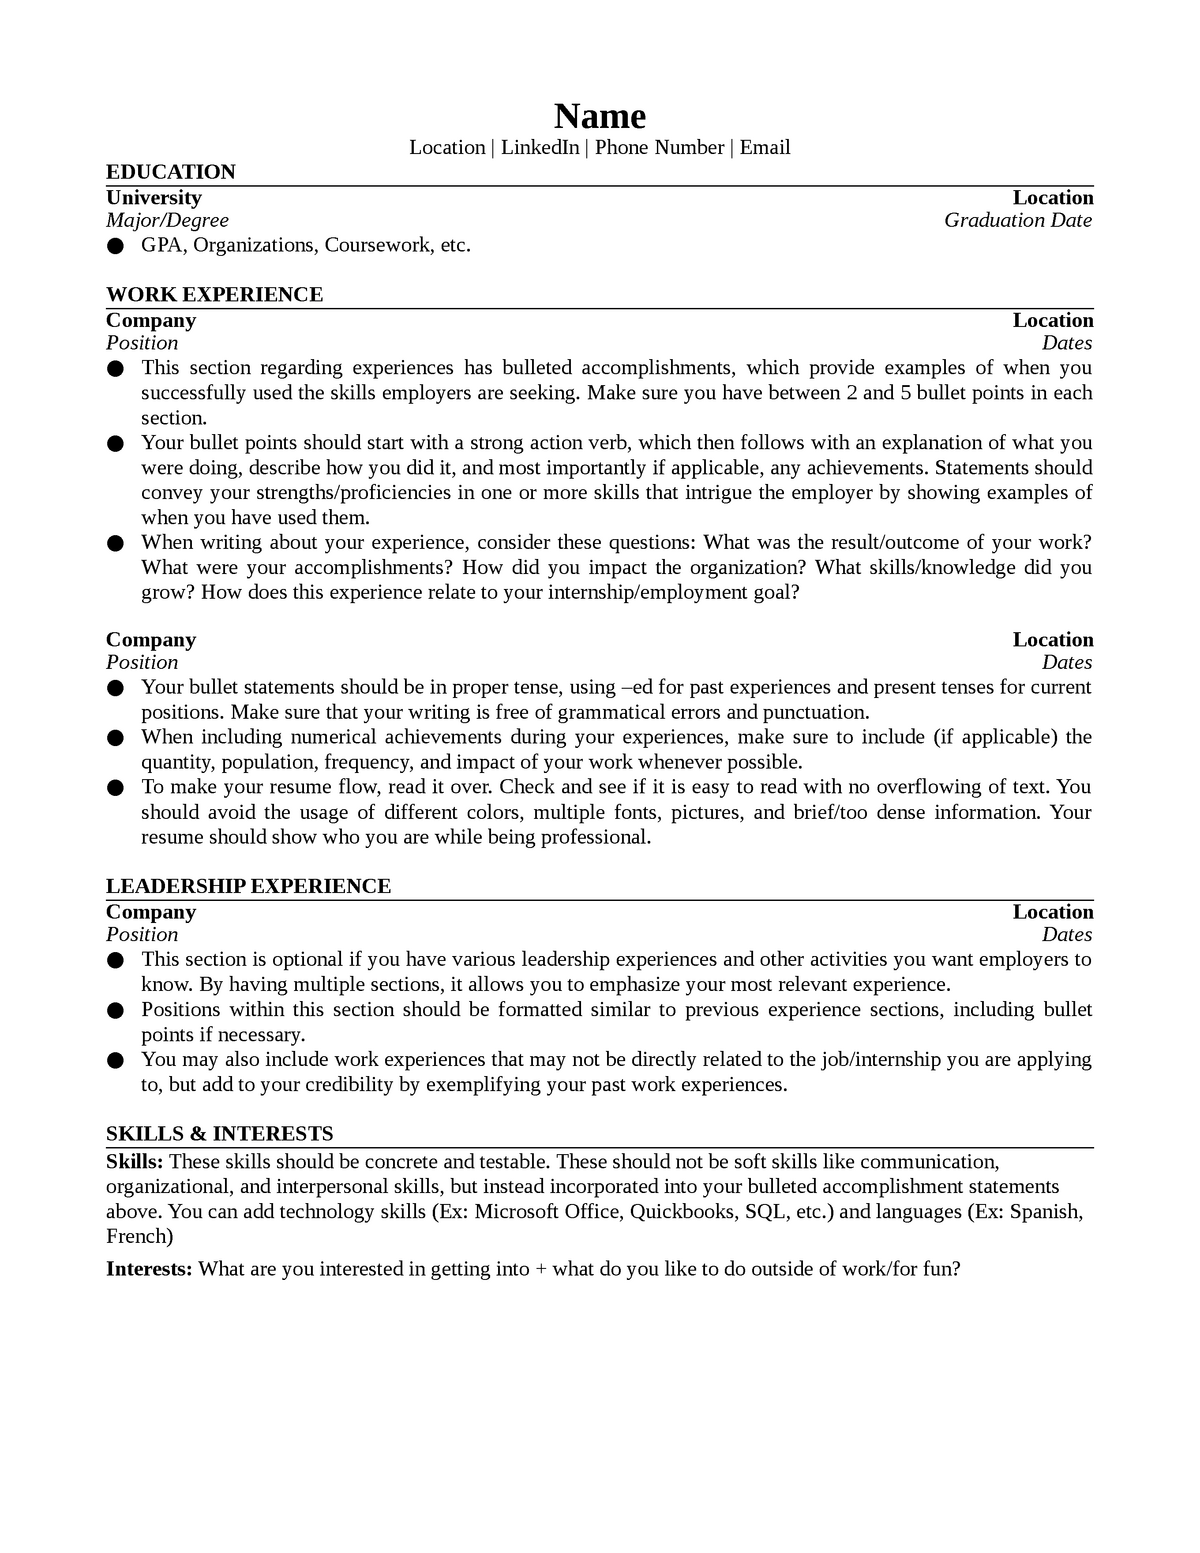 wonsulting resume template reddit